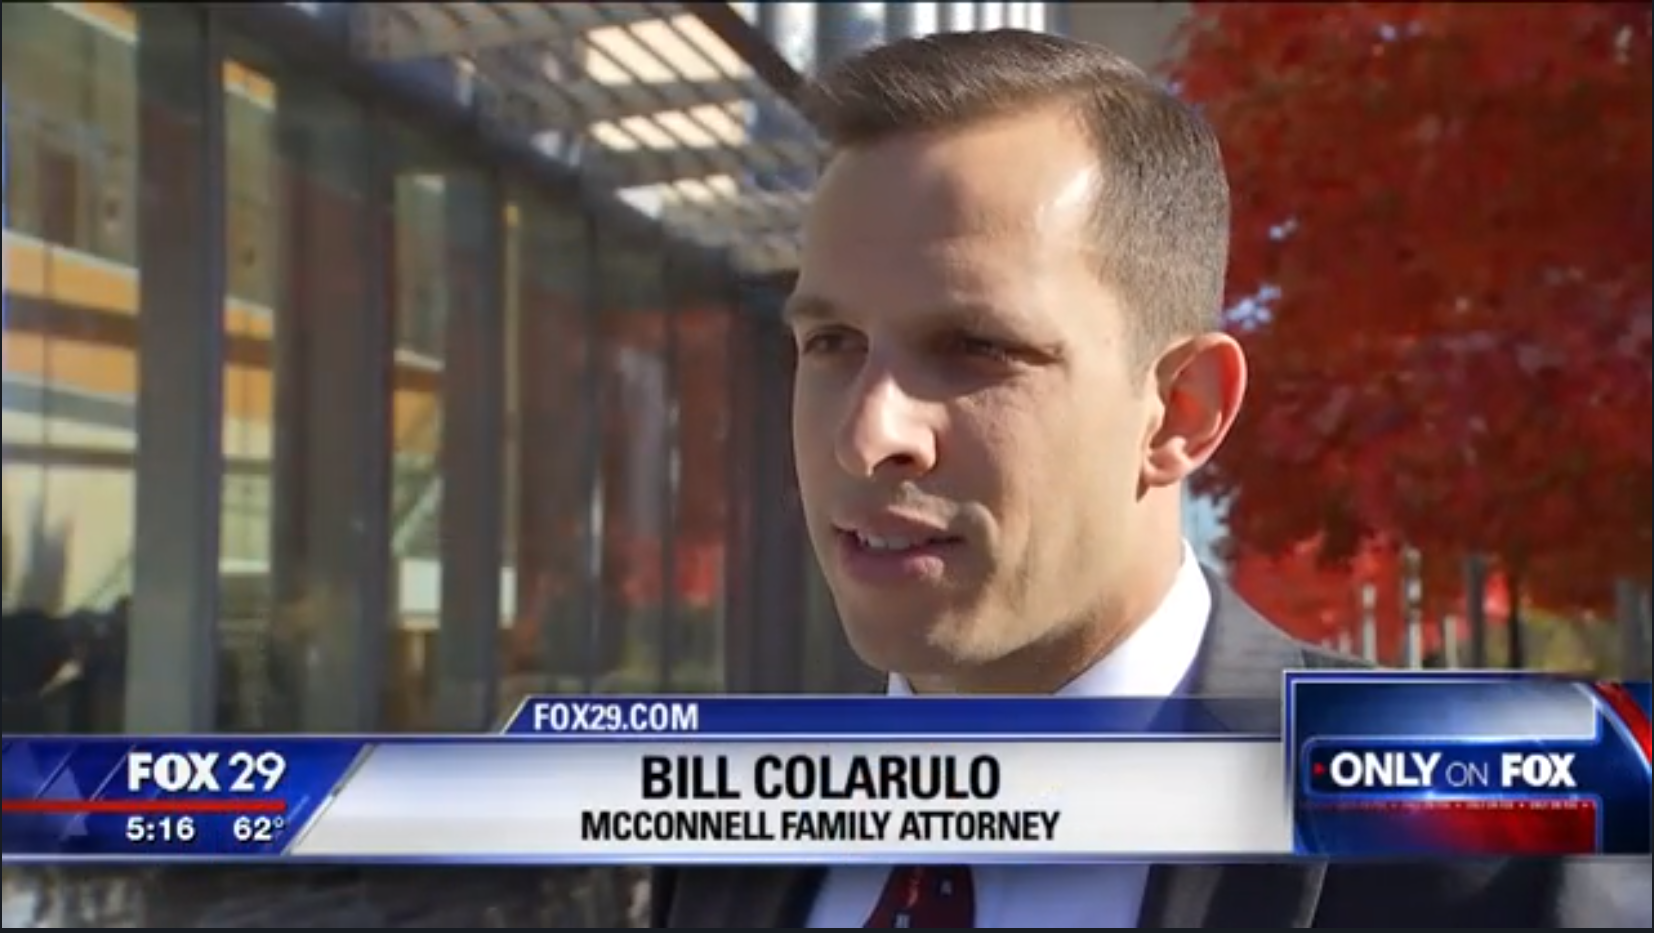 Bill Colarulo NJ Personal Injury Lawyer